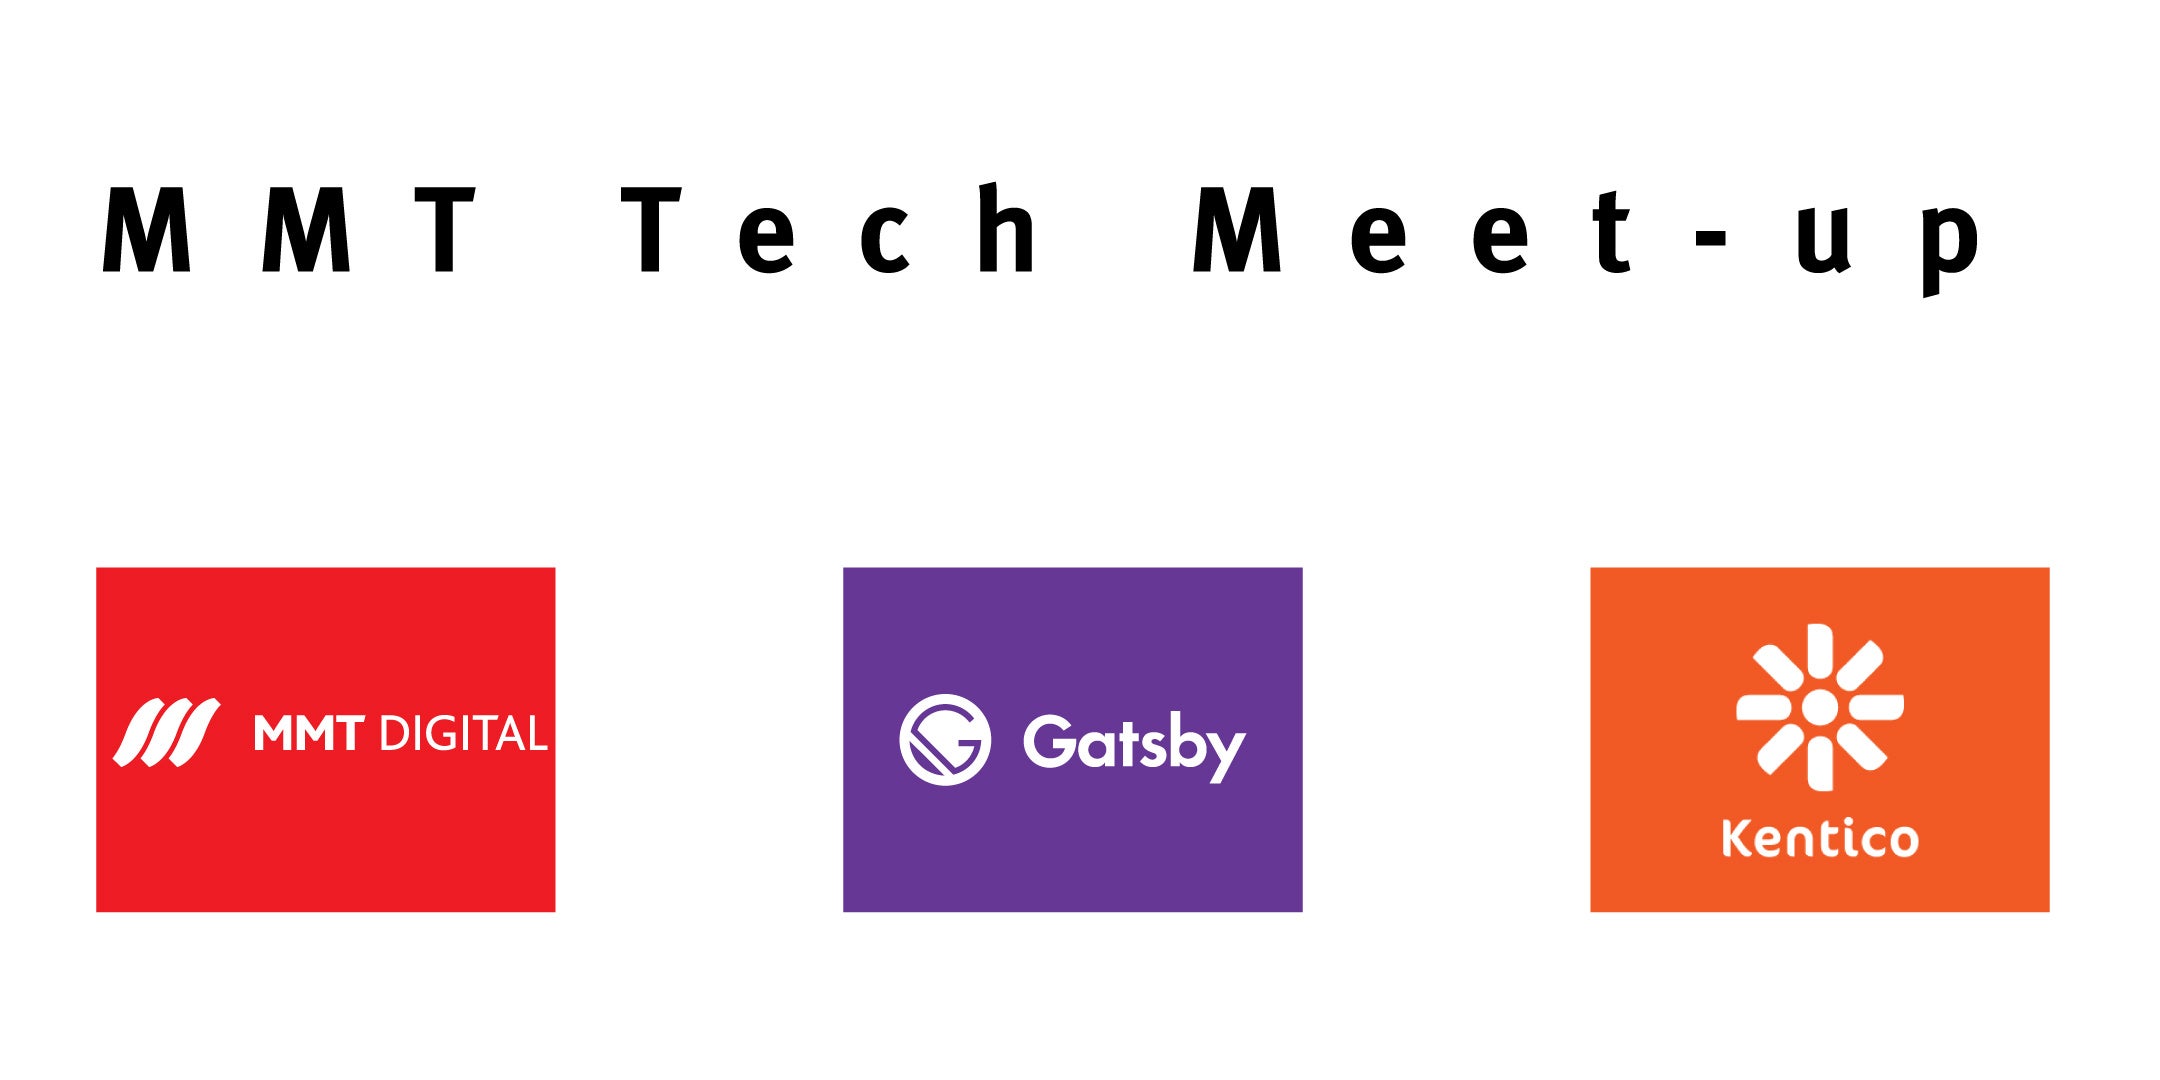 MMT Tech Meet-up: MMT, Gatsby and Kentico meet-up in London